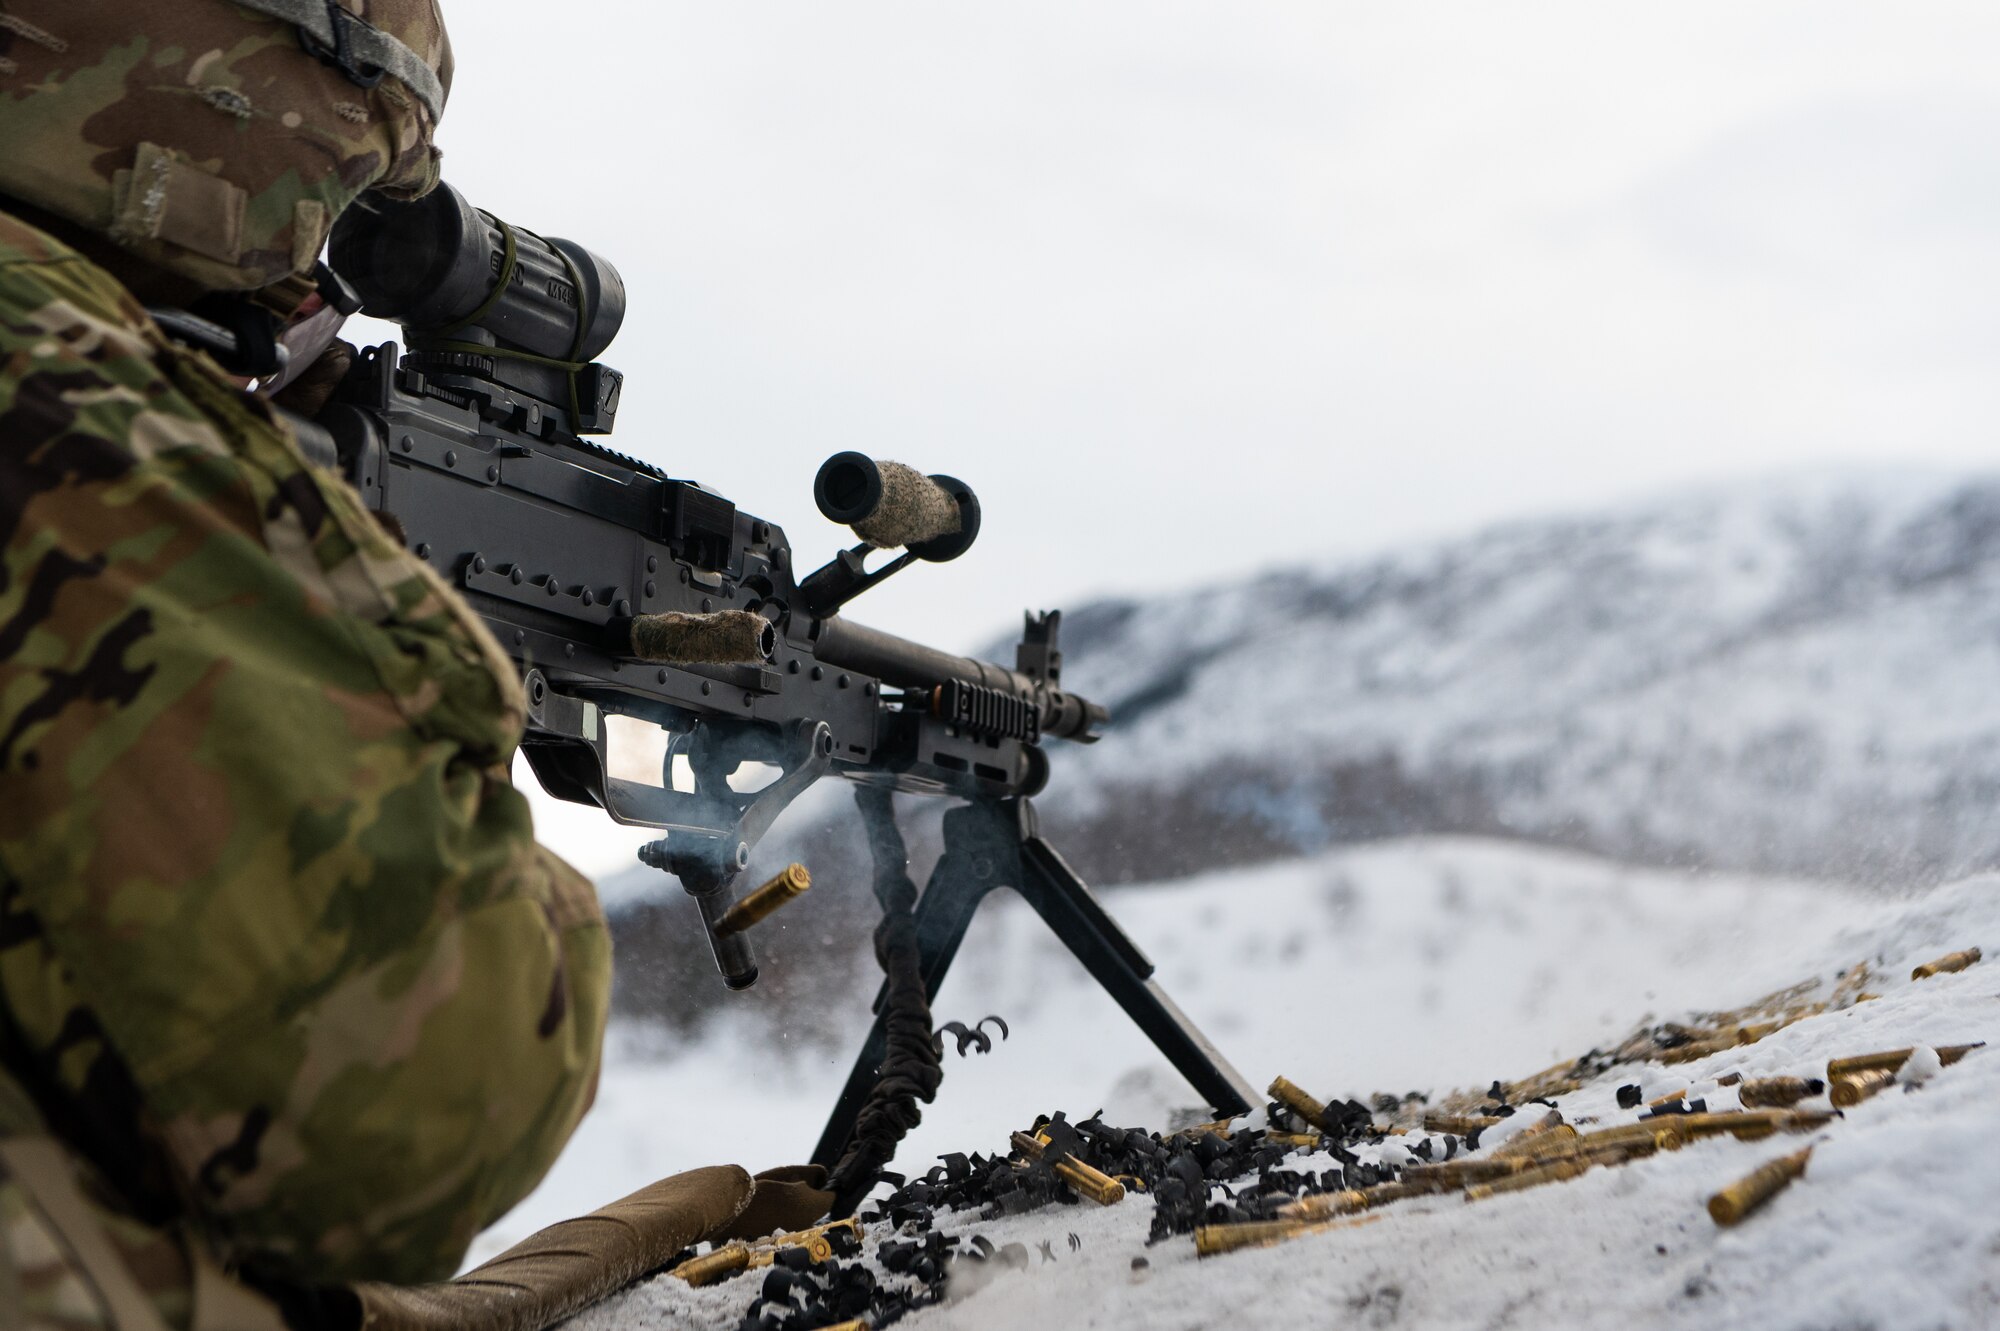 A photo of a soldier firing a machine gun